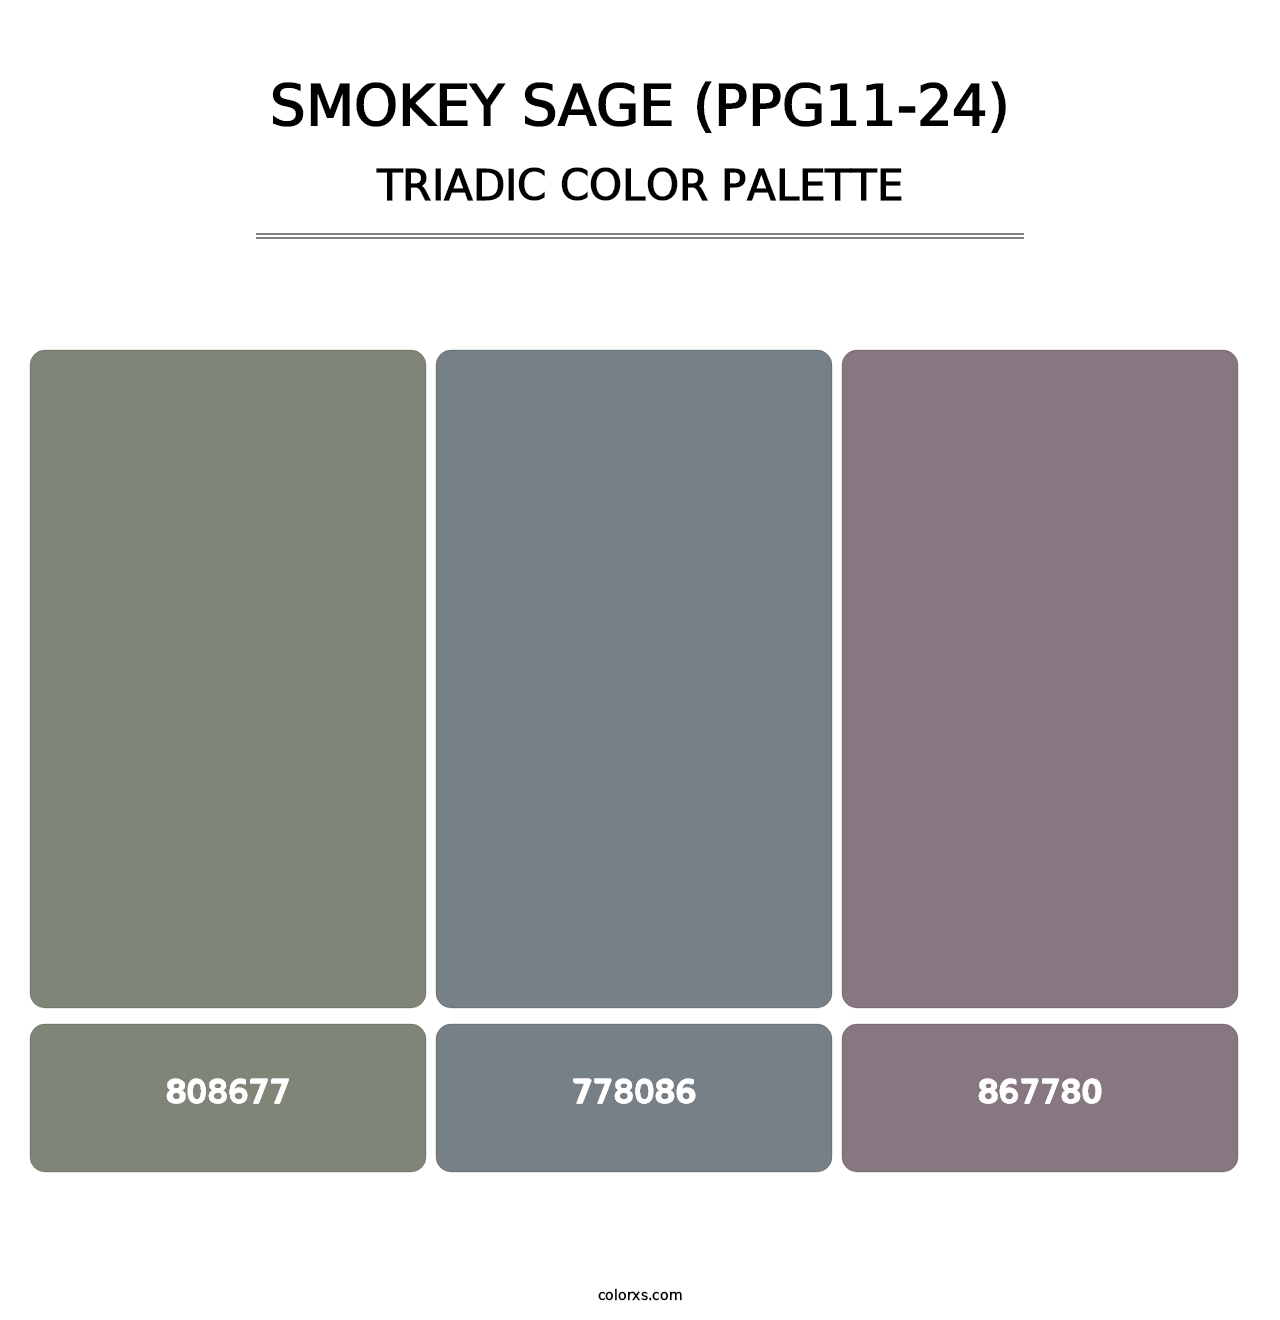 Smokey Sage (PPG11-24) - Triadic Color Palette